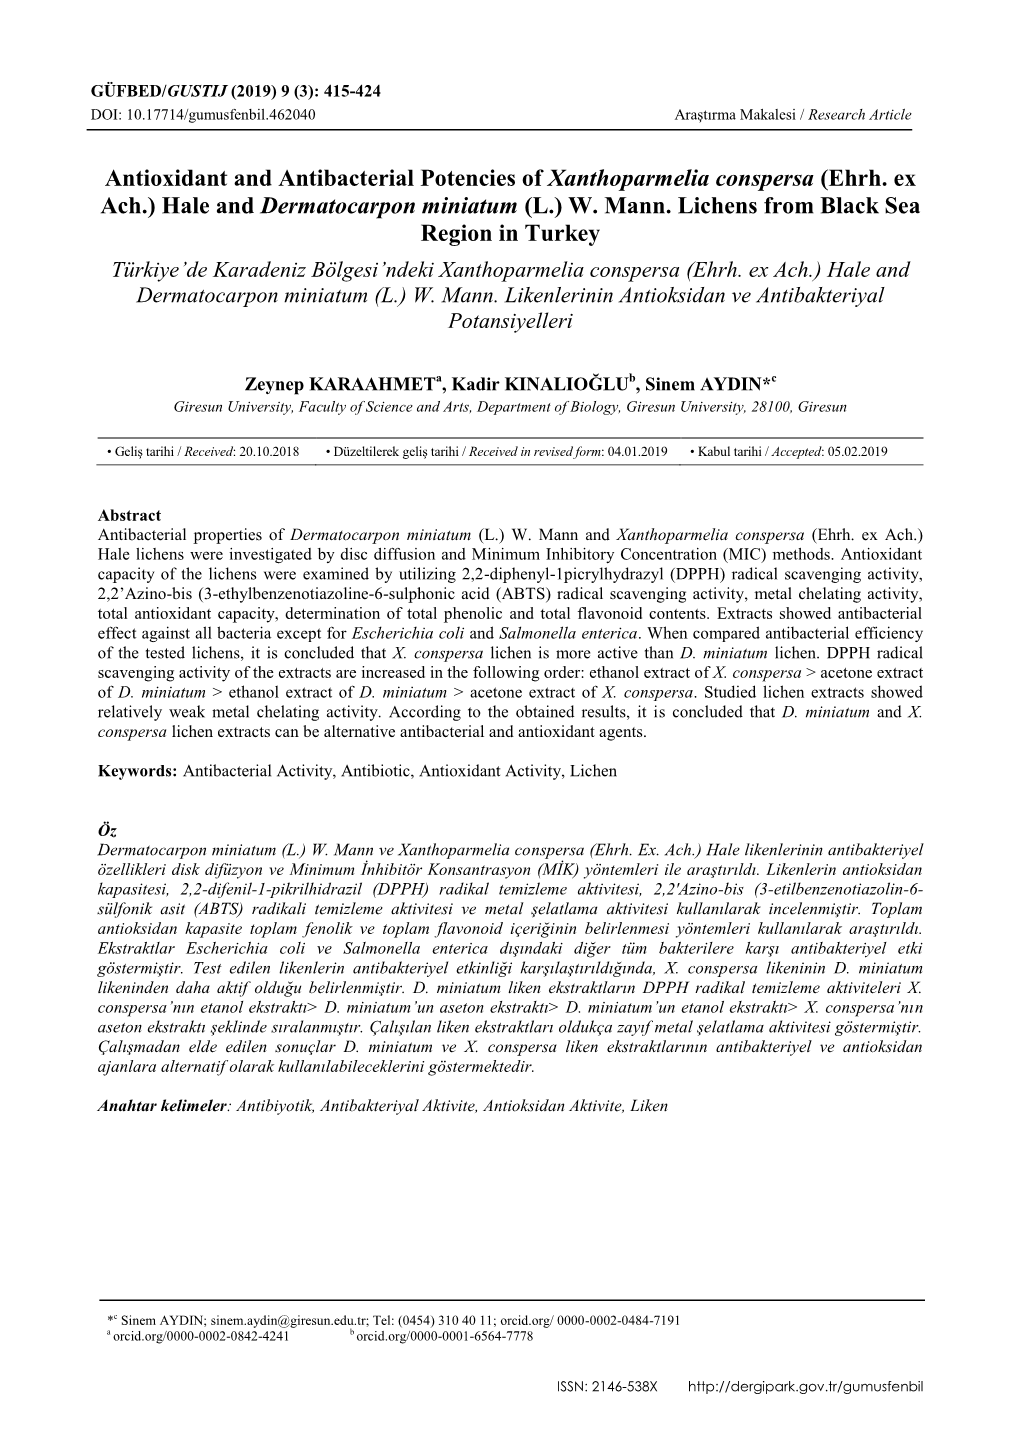 Antioxidant and Antibacterial Potencies of Xanthoparmelia Conspersa (Ehrh